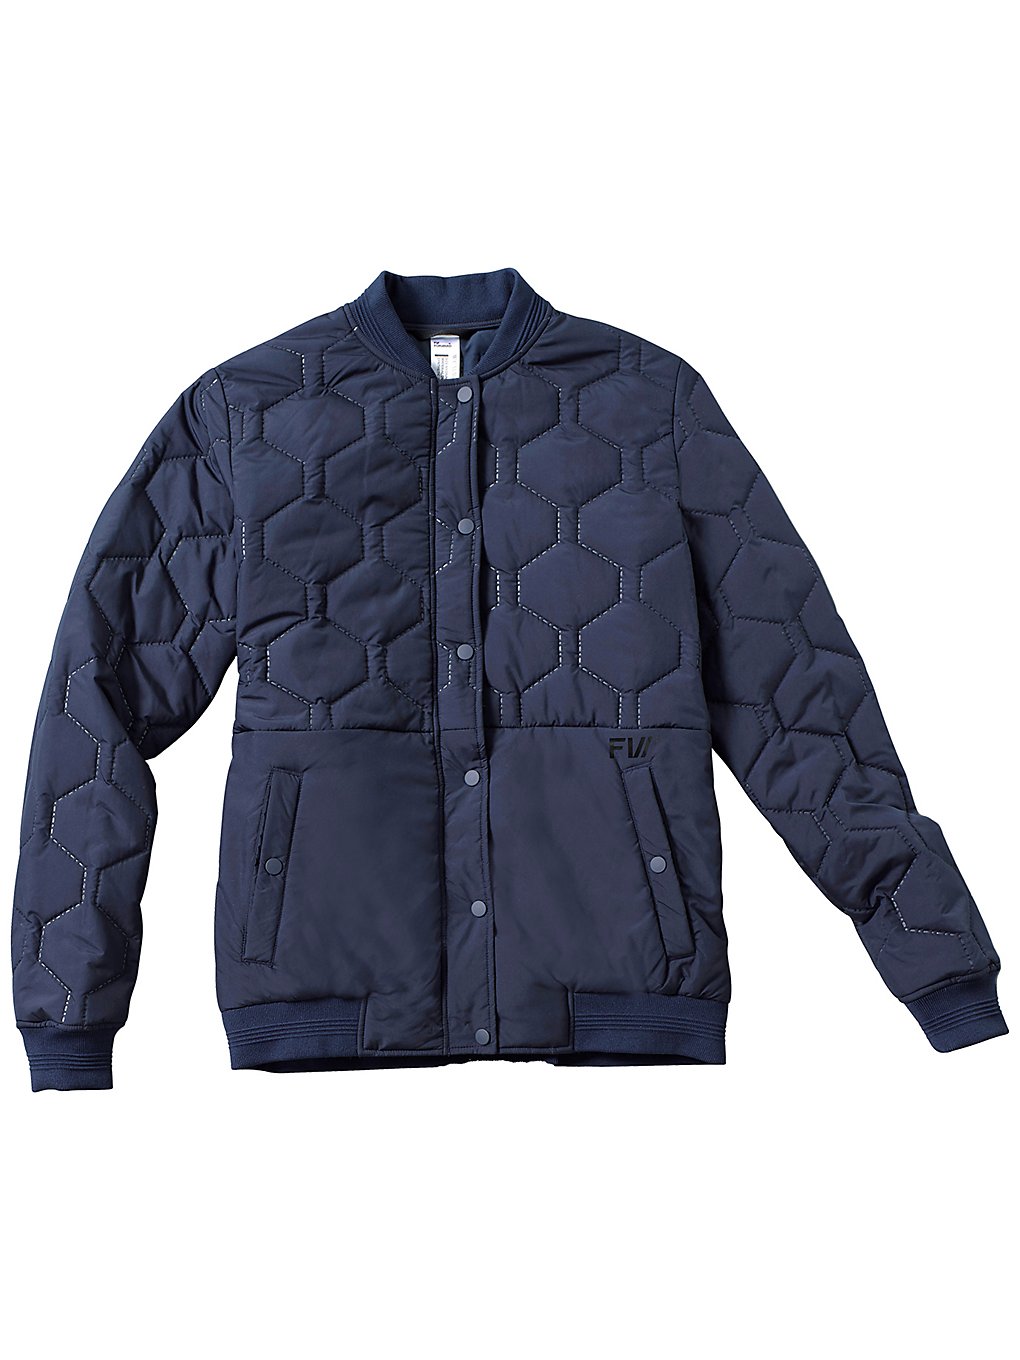 FW Catalyst Riding Shirt Insulator Jacket slate blue